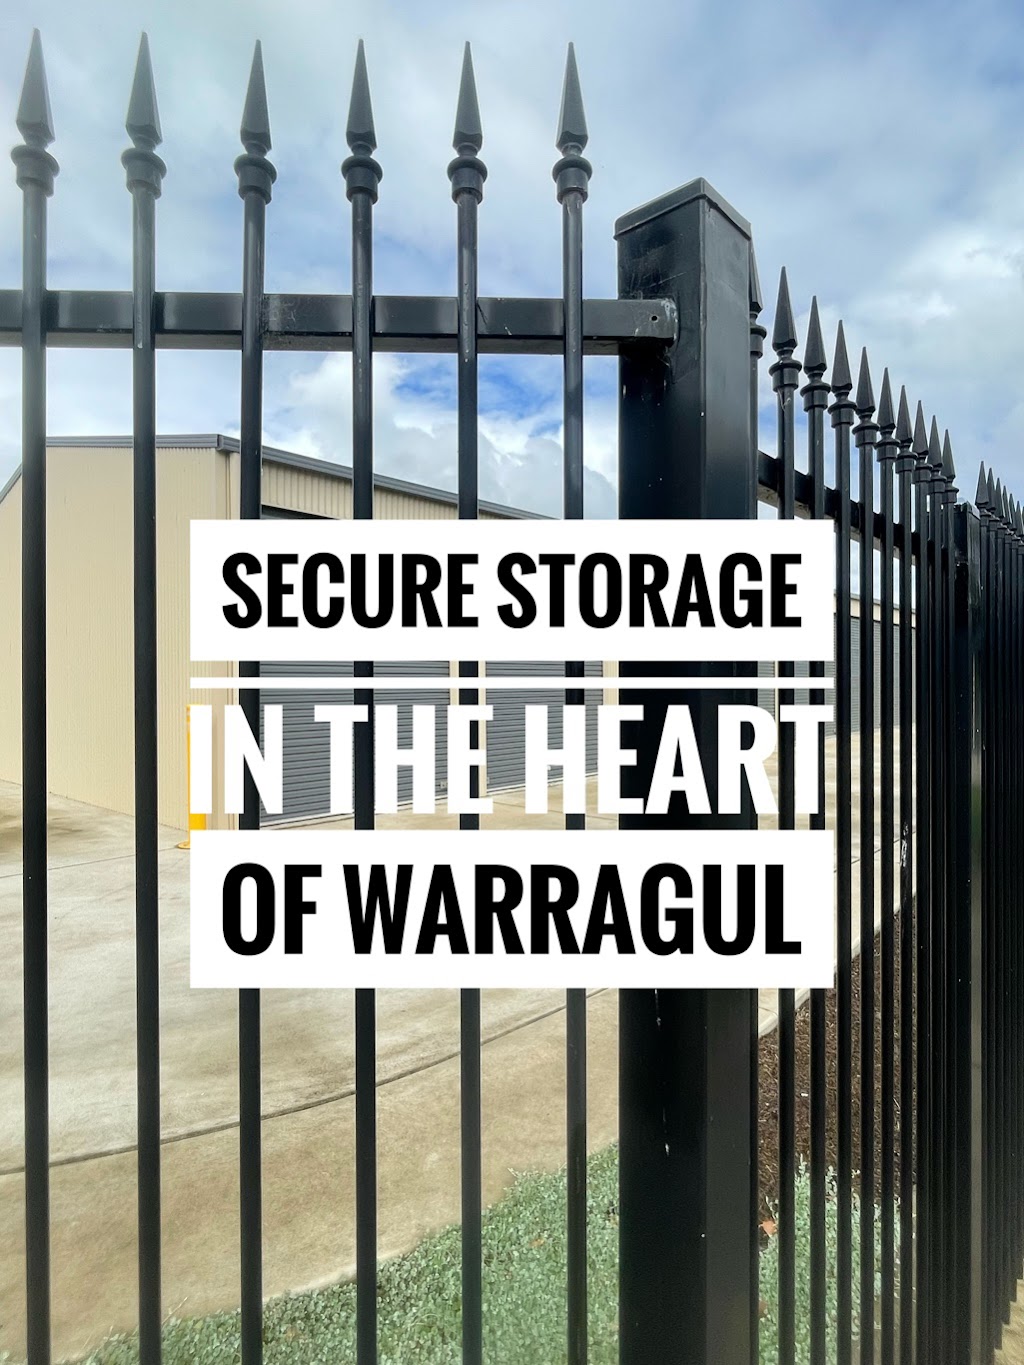 Storage Units Warragul | storage | 14 Wills St and, 5 Neilson Ct, Warragul VIC 3820, Australia | 0356223800 OR +61 3 5622 3800